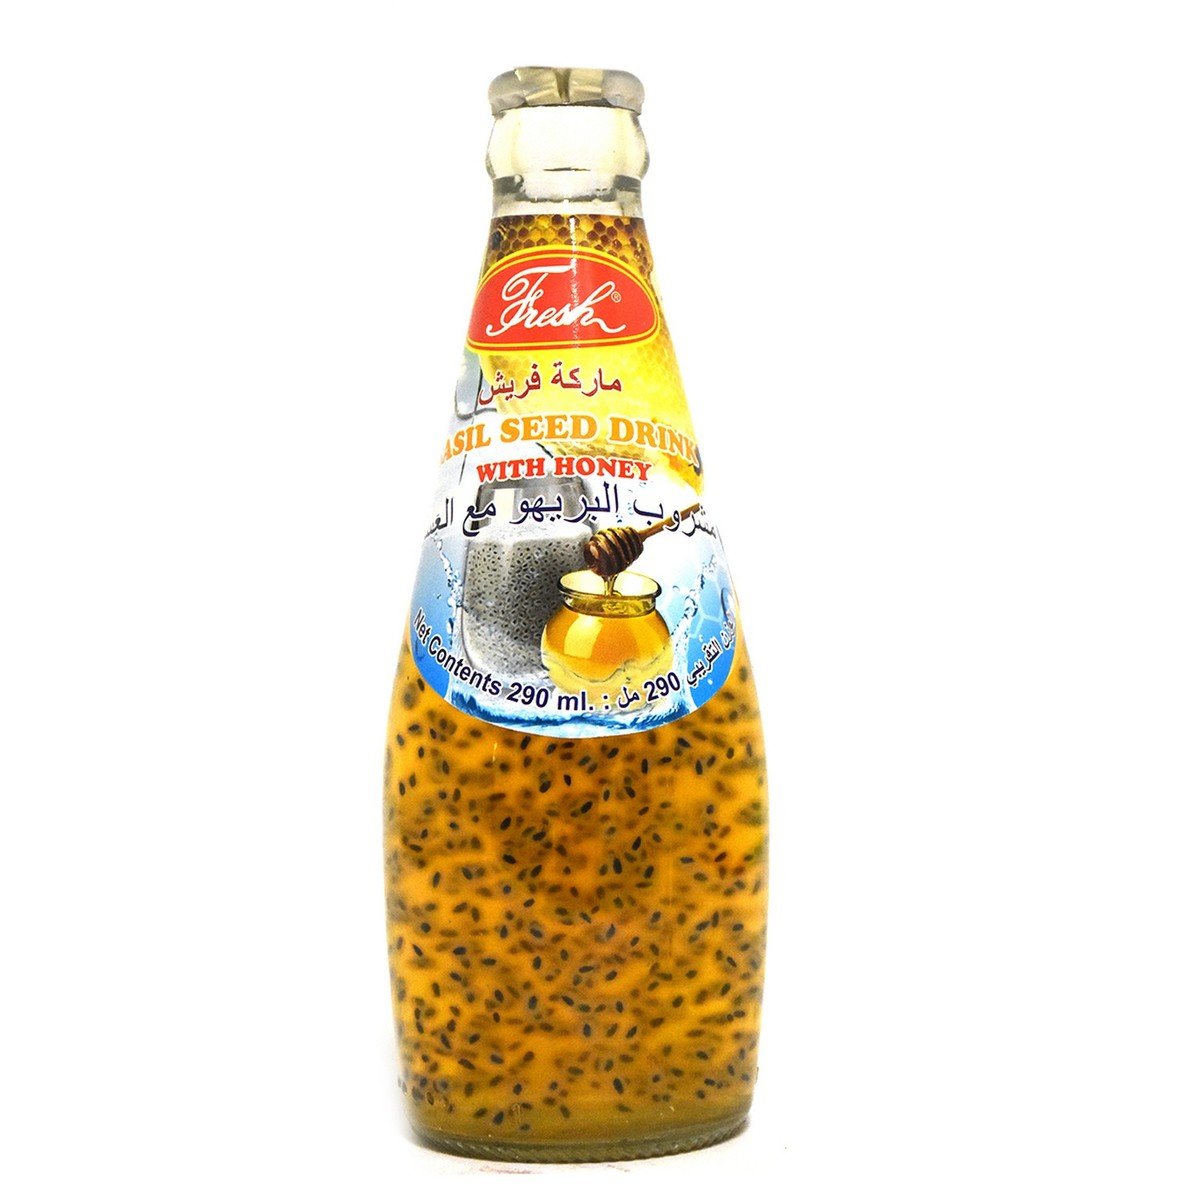 Fresh Basil Seed Drink With Honey 290 ml